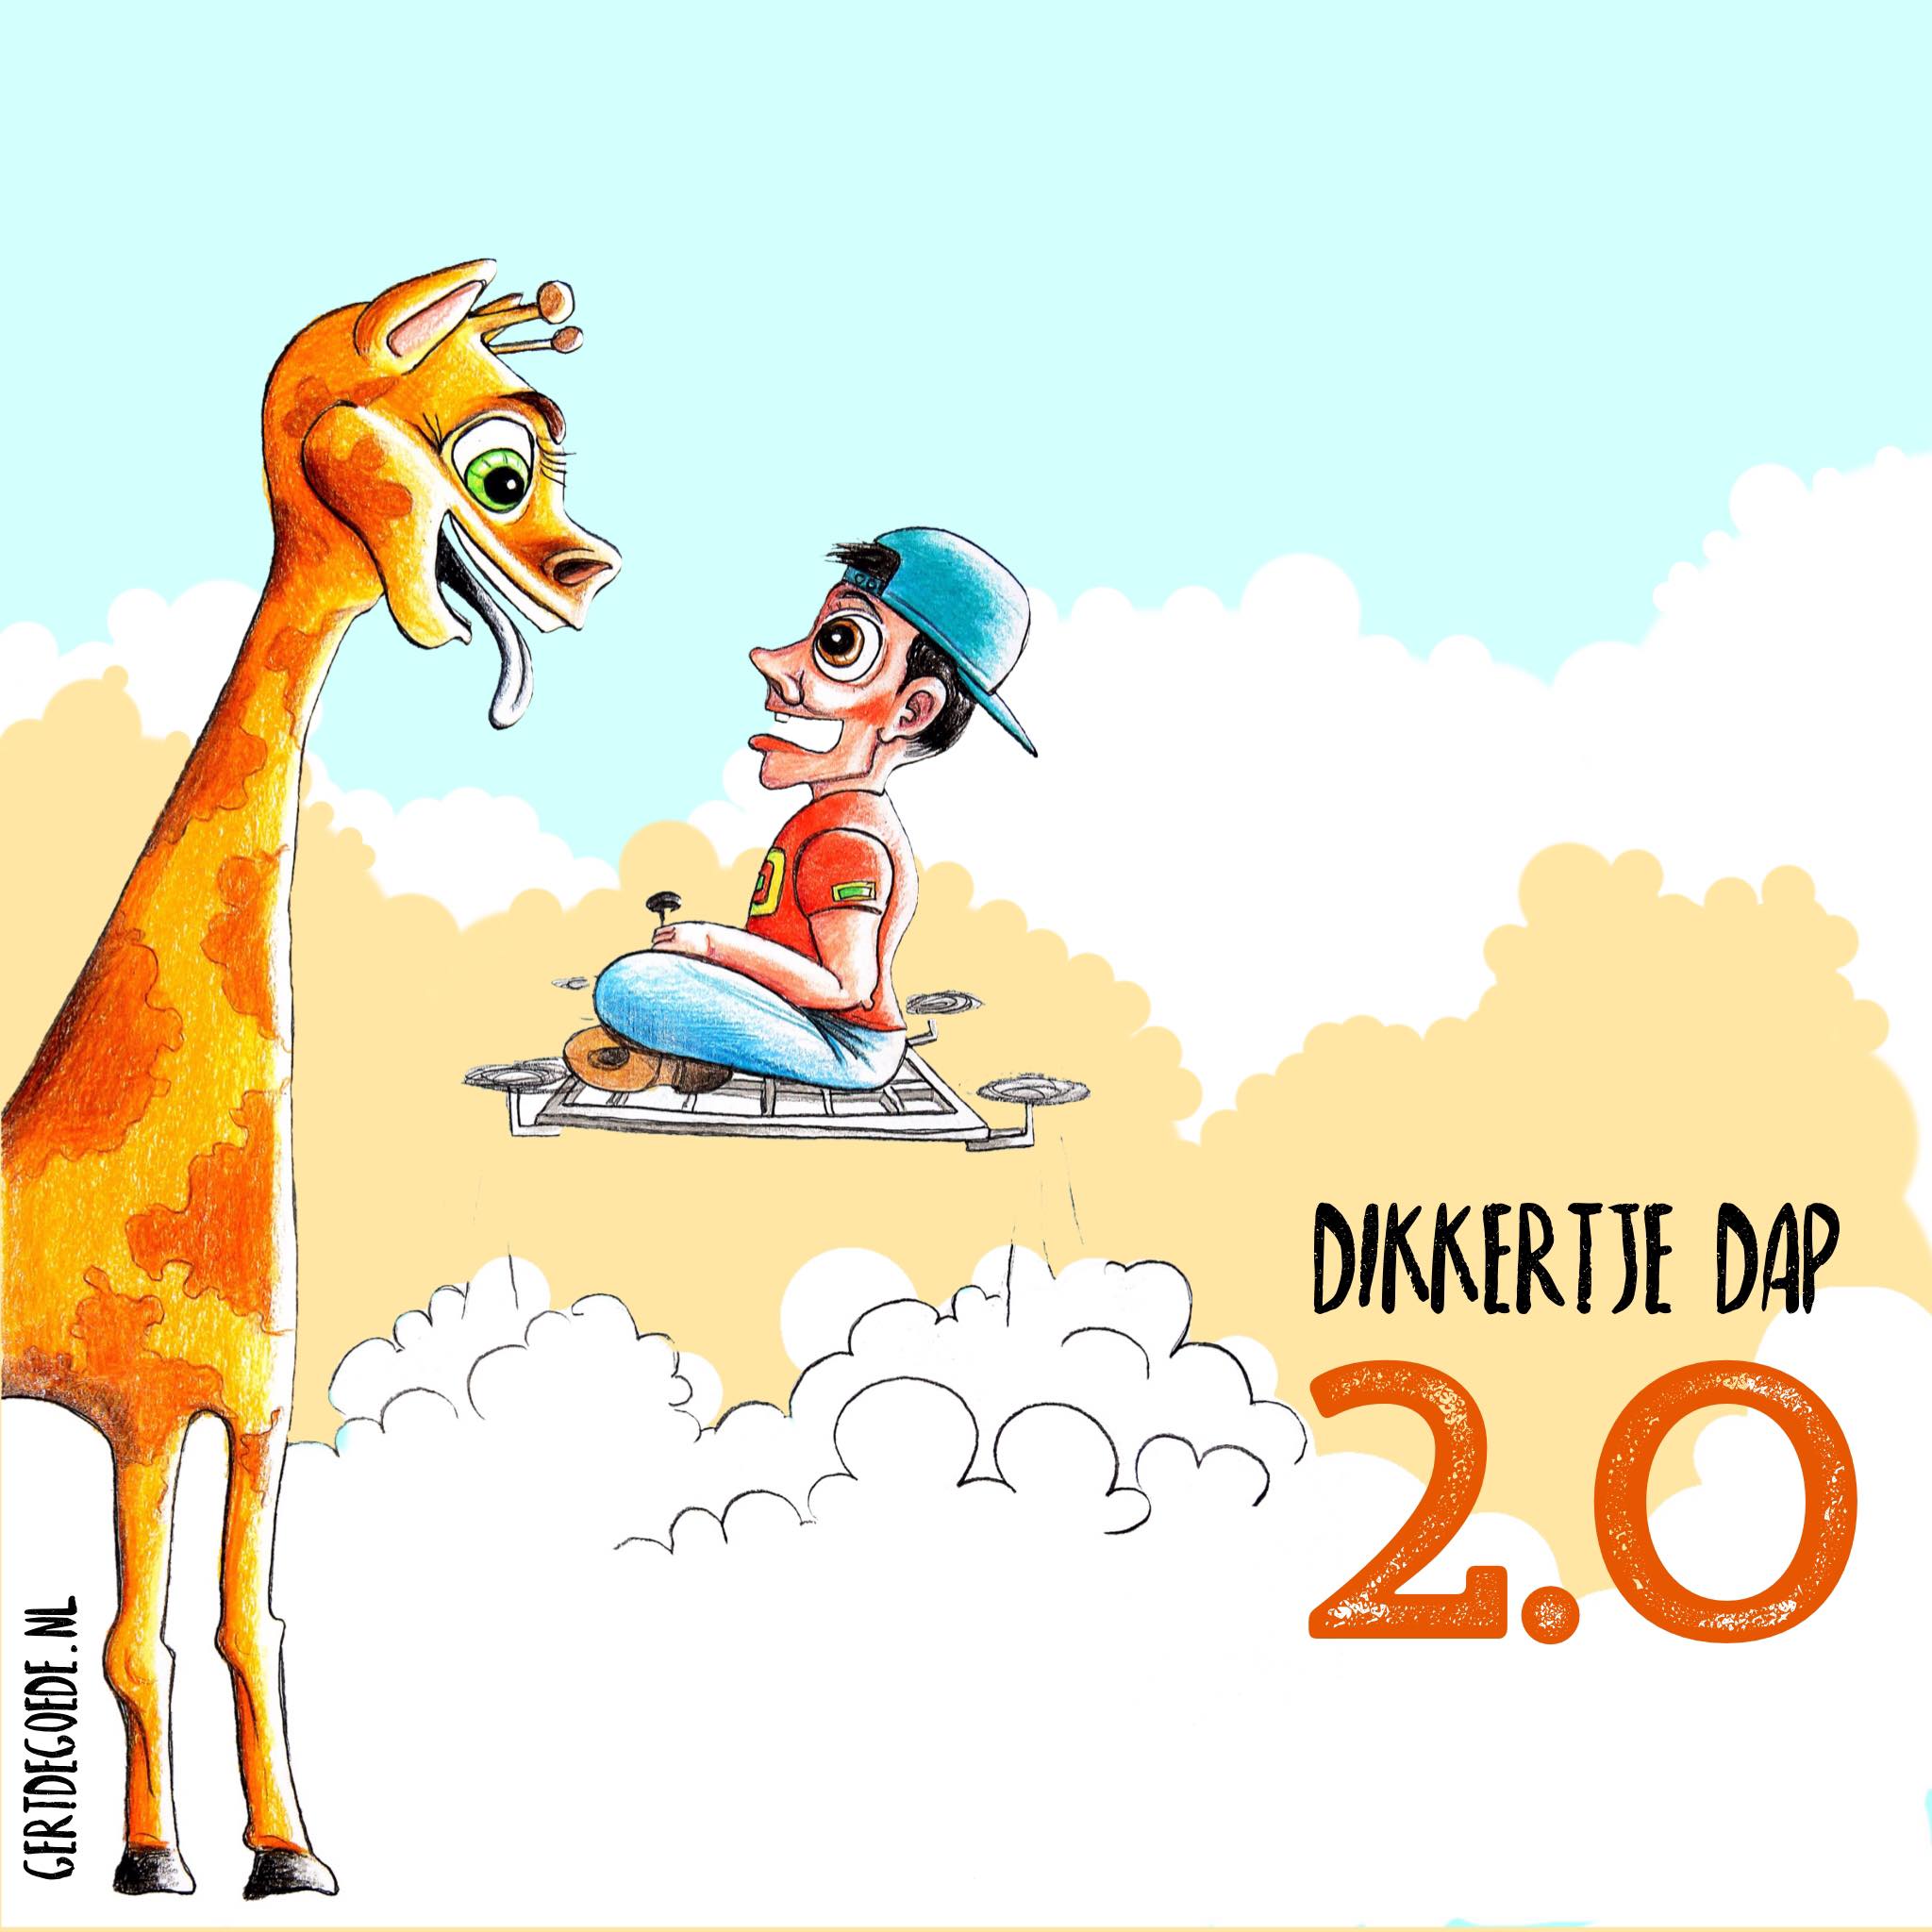 dikkertje dap klom op de trap giraf giraffe stairs 2.0 drone cloud cartoon comic vrolijk happy kinder versje childrens song